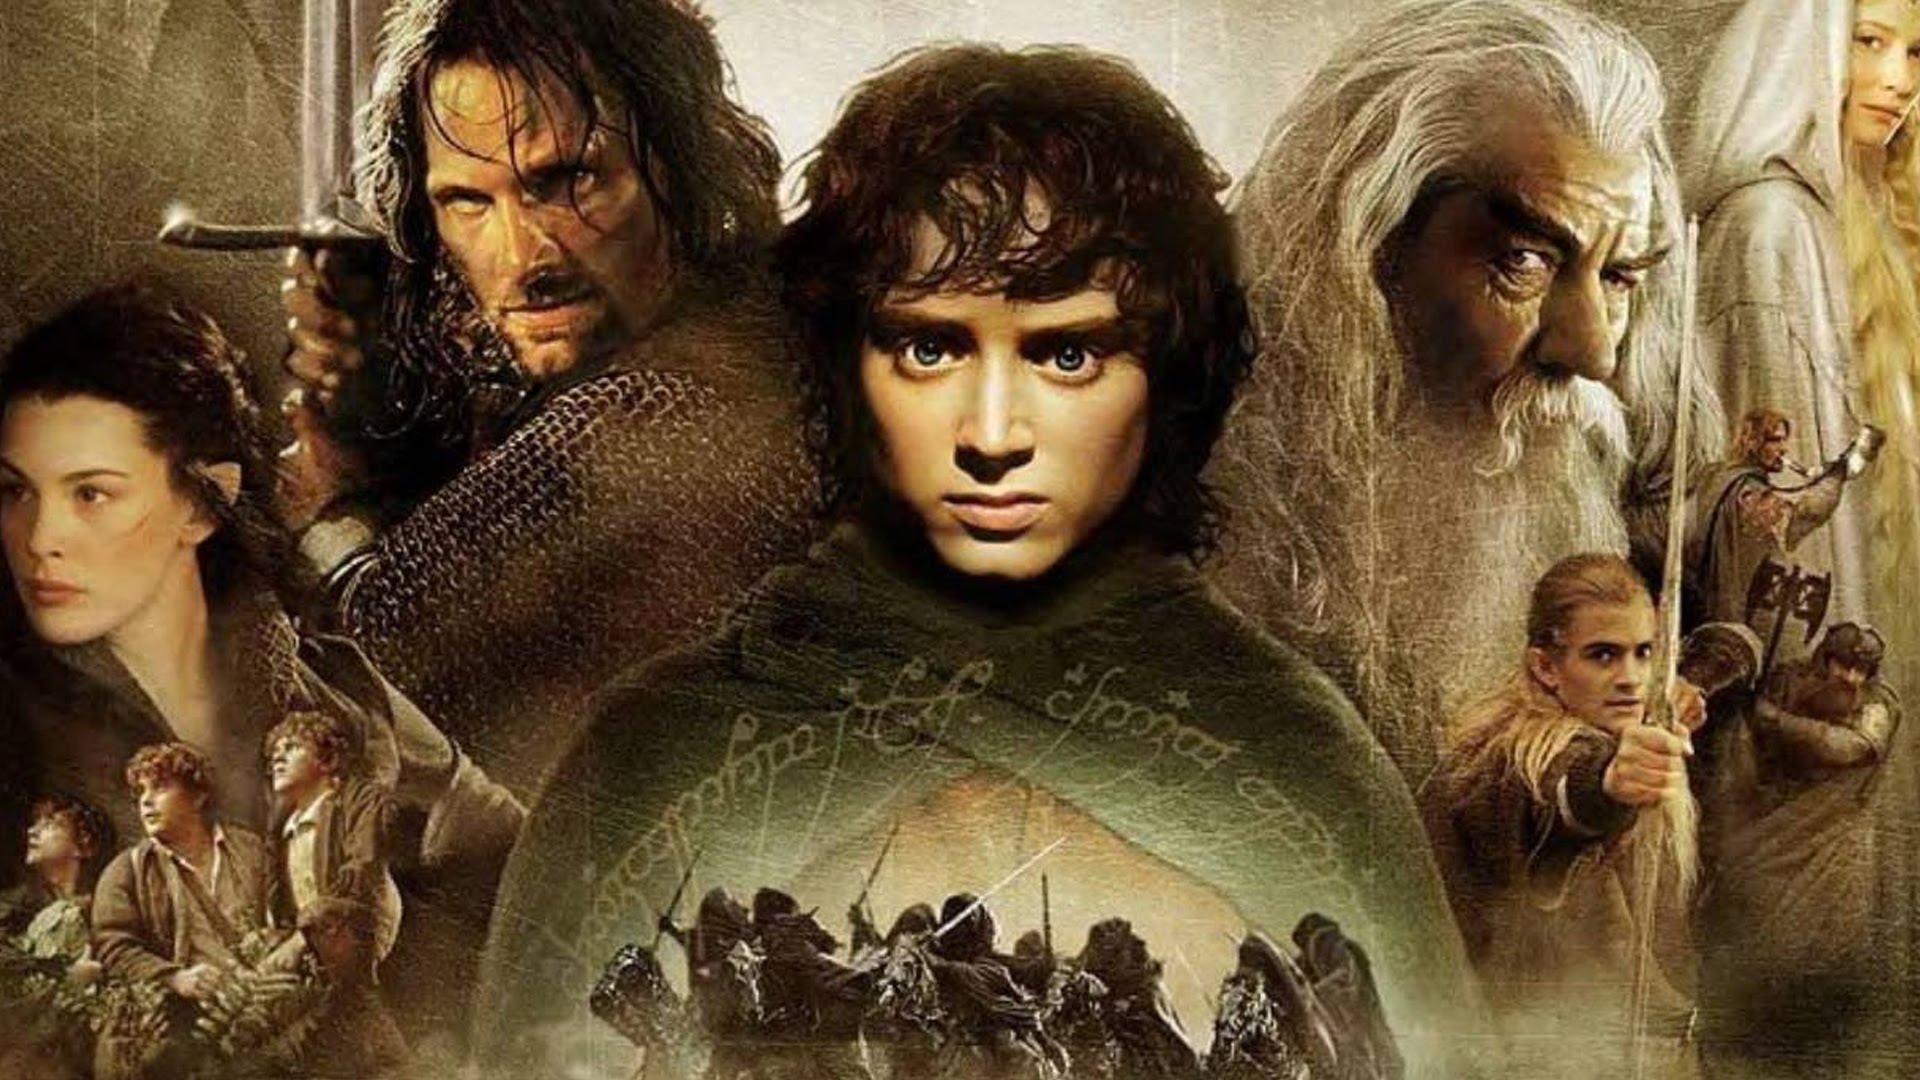 مسلسل The Lord of the Rings الموسم الثاني